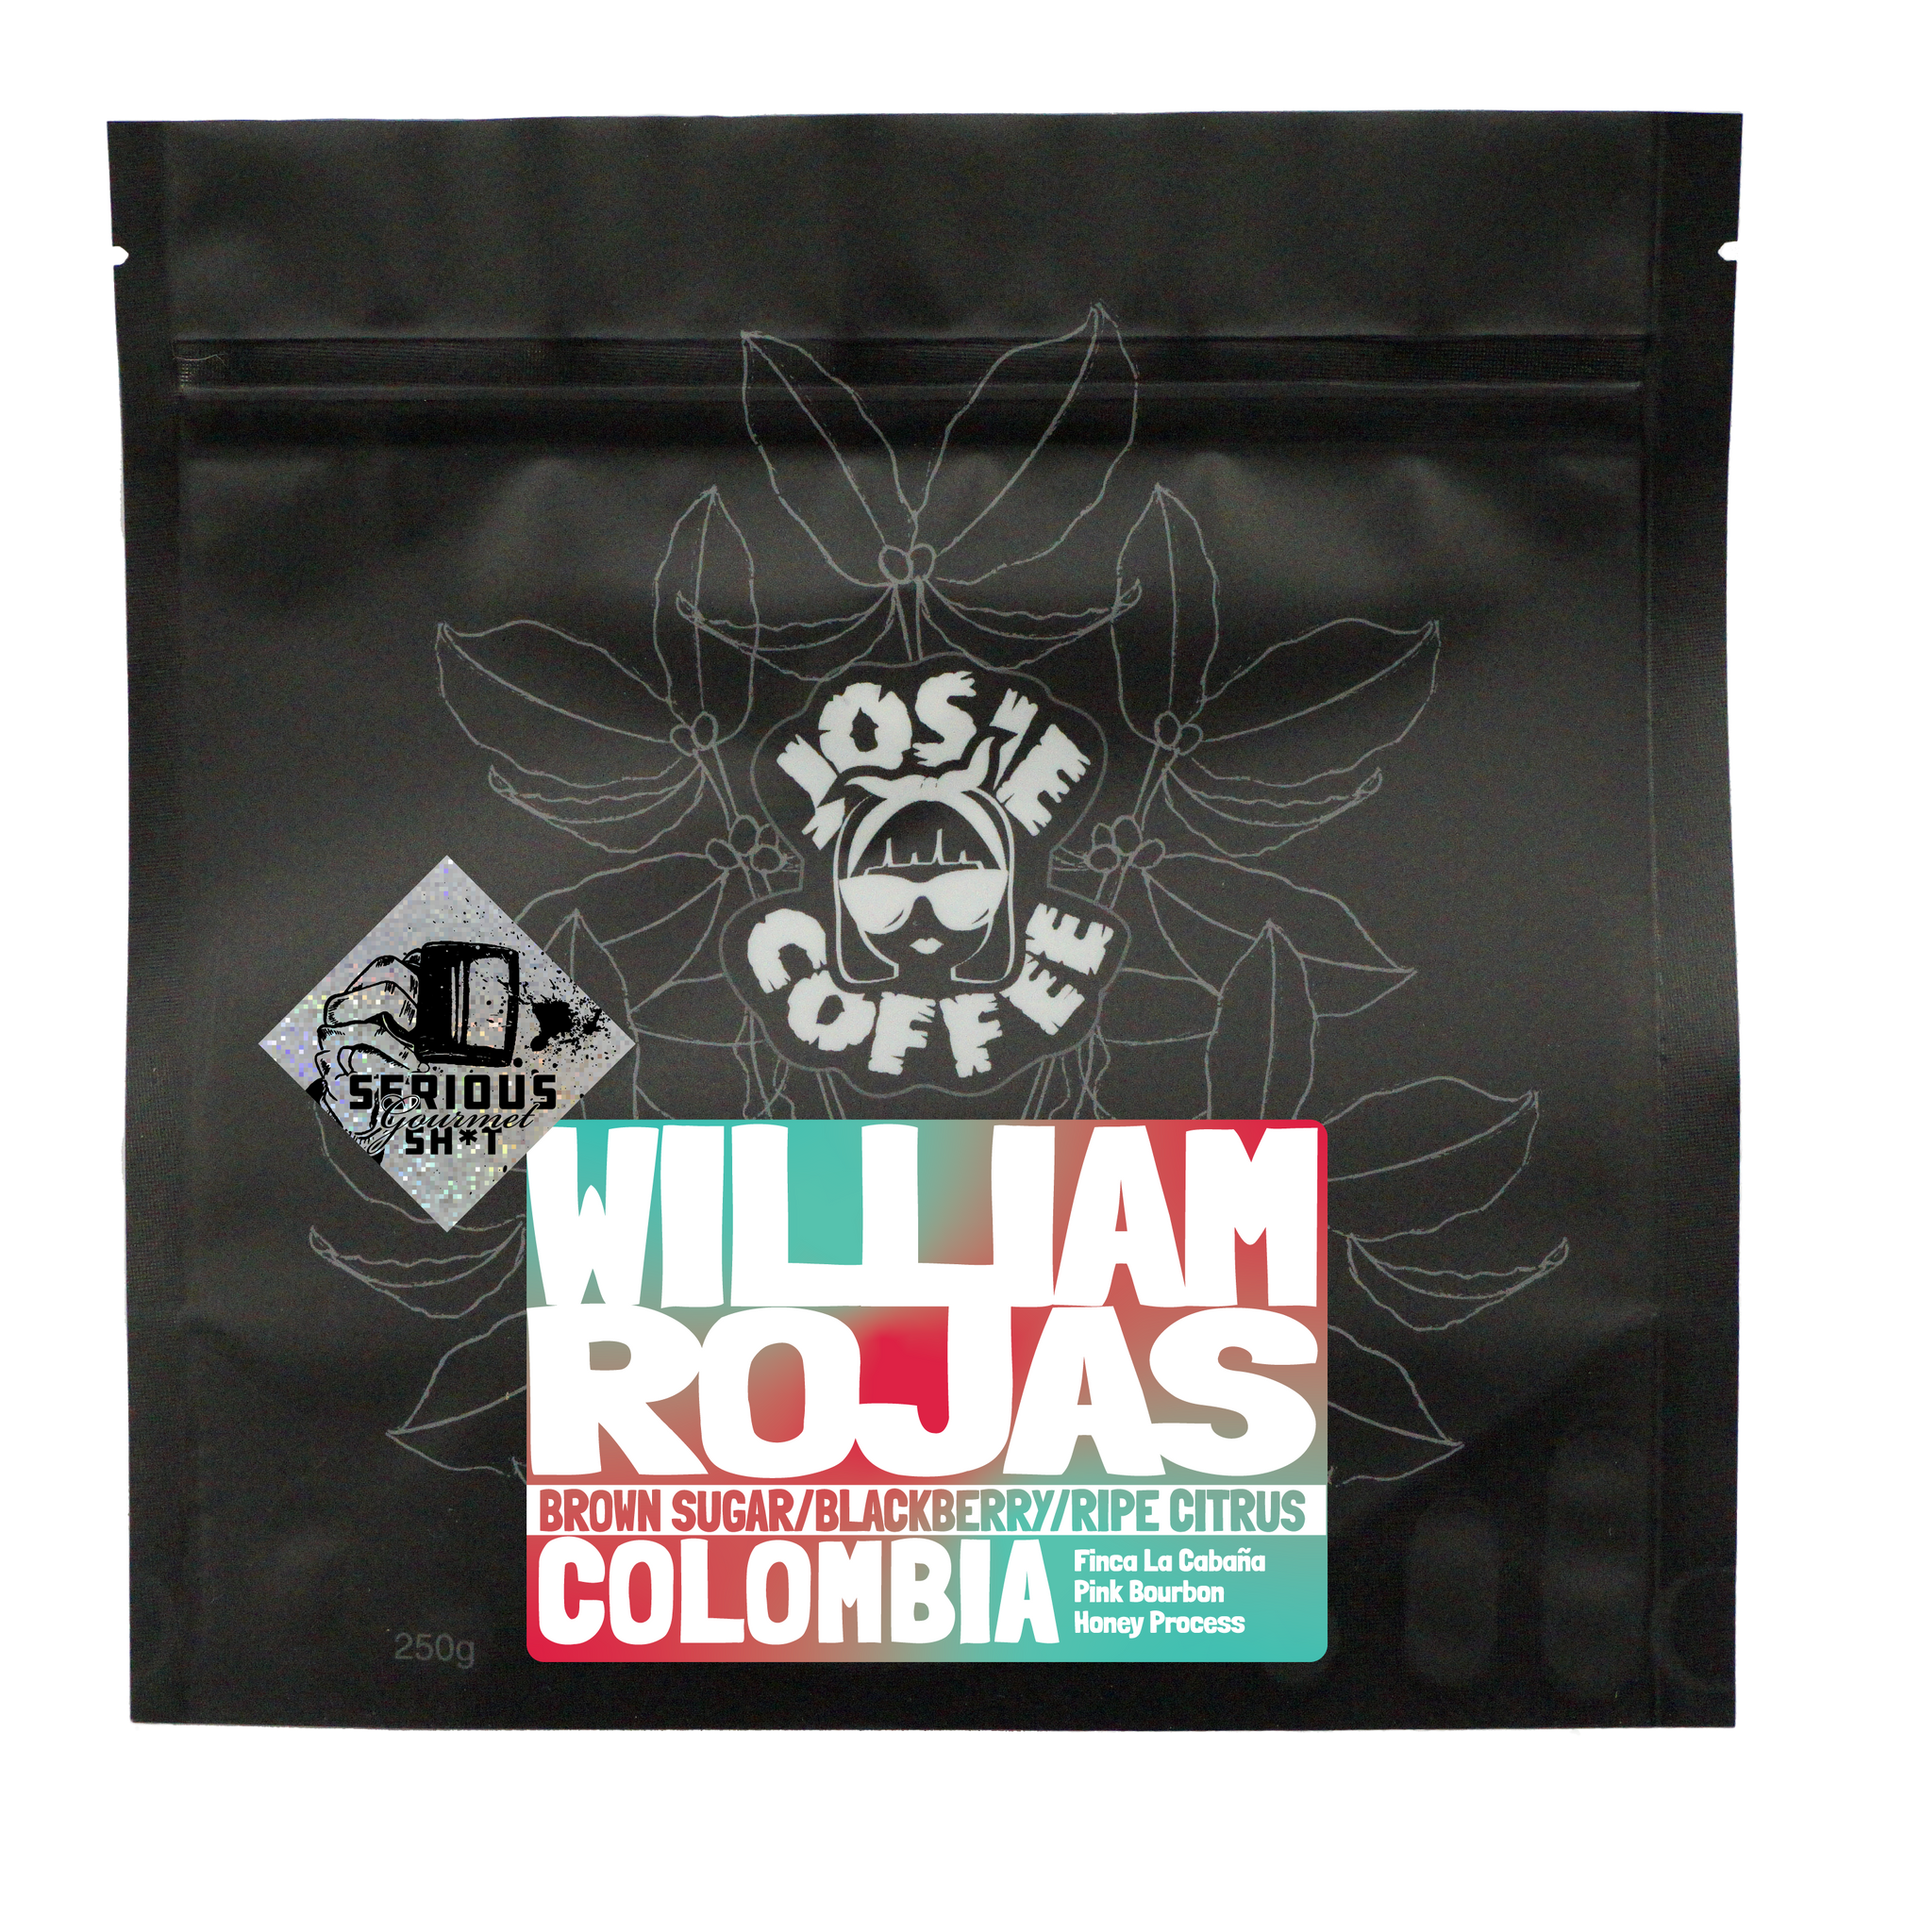 Colombia - William Rojas - Pink Bourbon - Honey Process